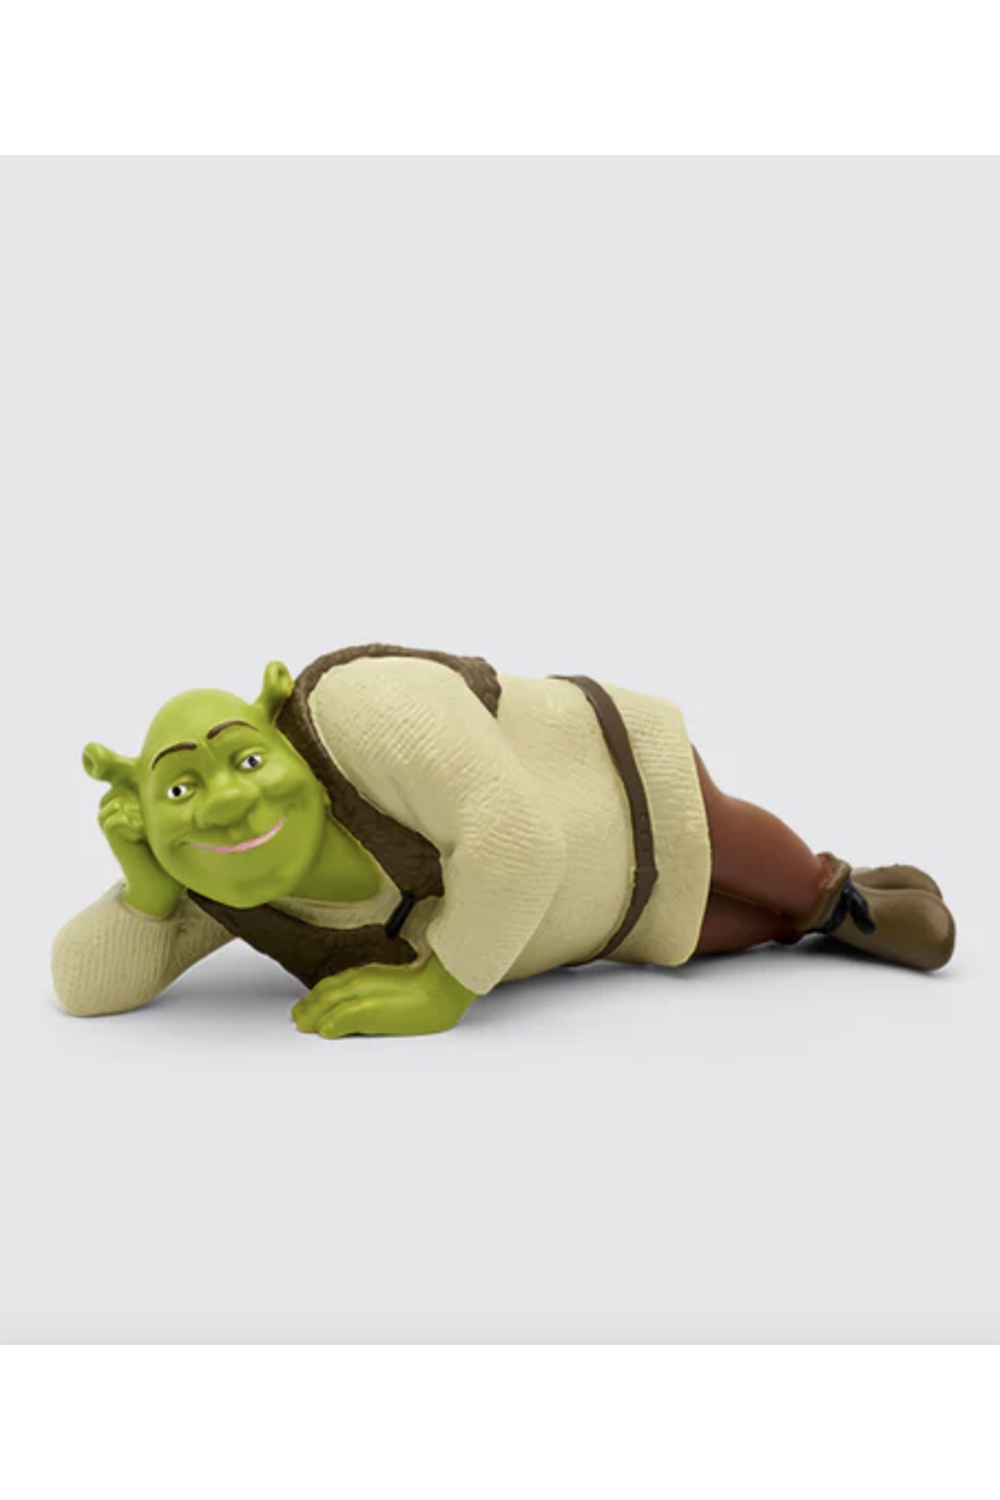 Tonies Topper - Shrek